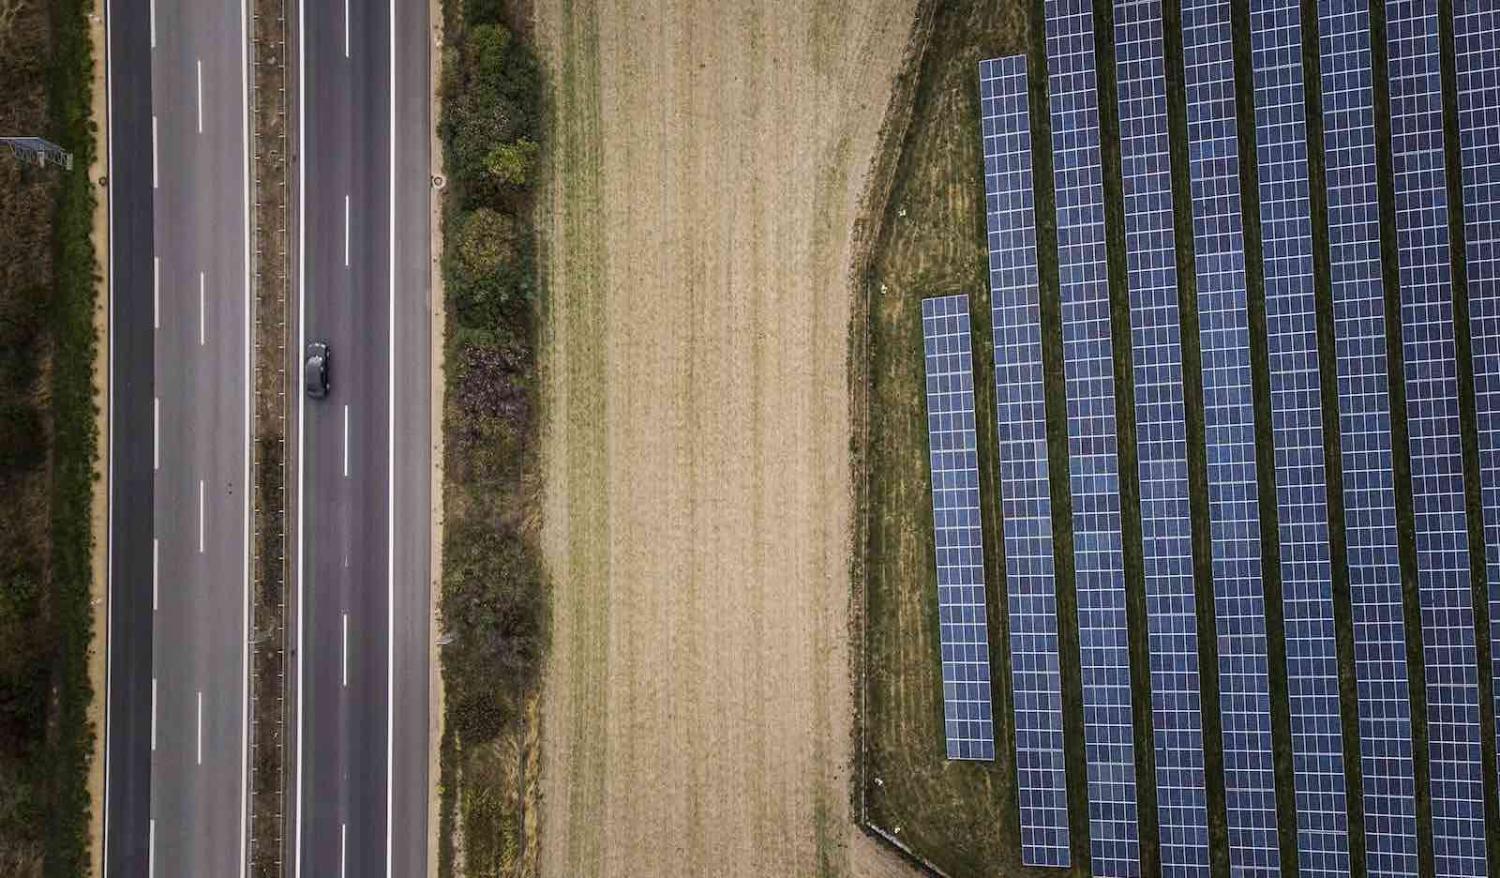 A solar field in Kodersdorf, Germany (Photo: Florian Gaertner via Getty)